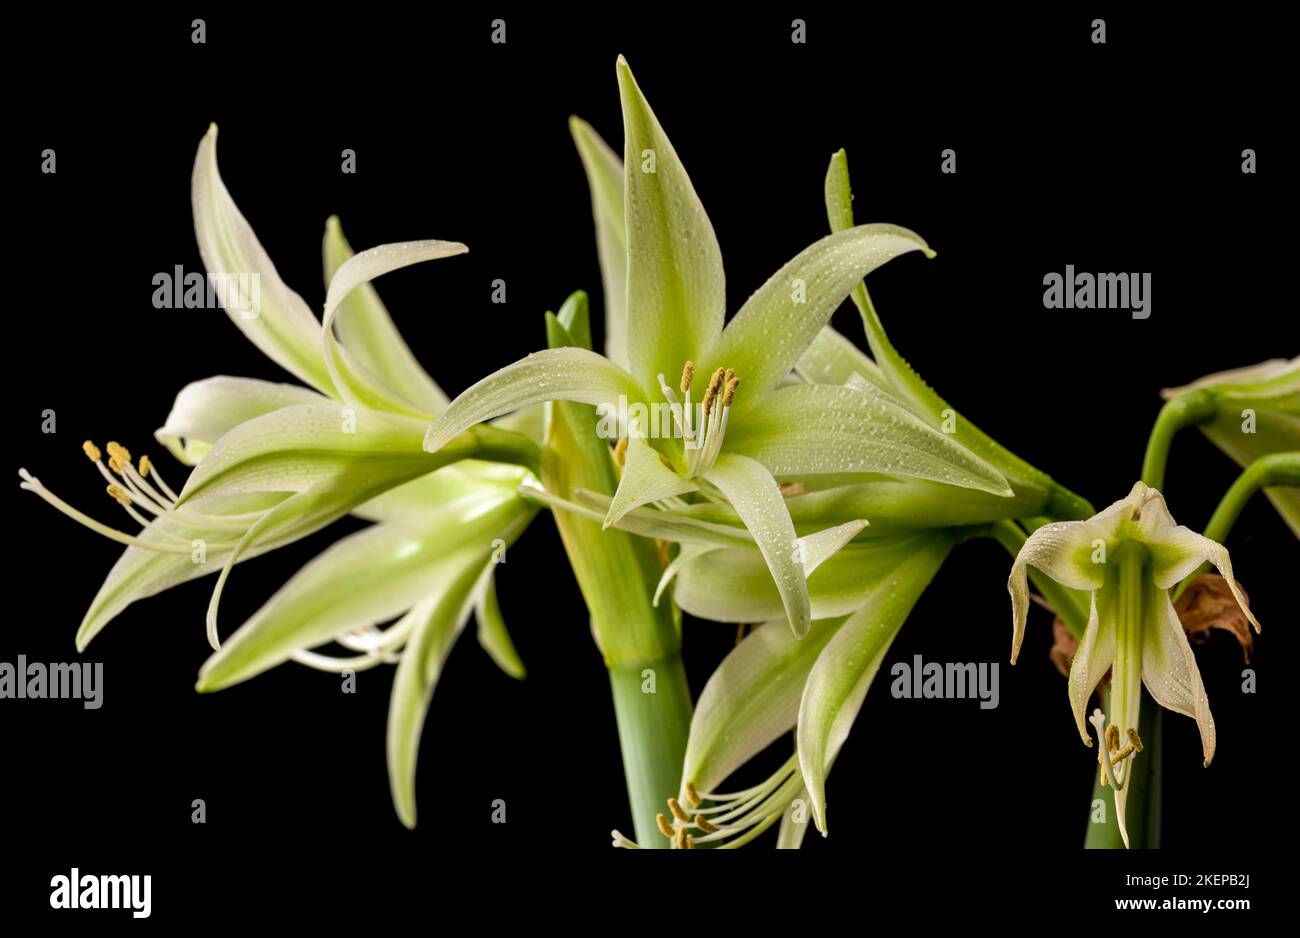 'Evergreen' Hippeastrum, Amaryllis (Hippeastrum x hortorum) Stock Photo